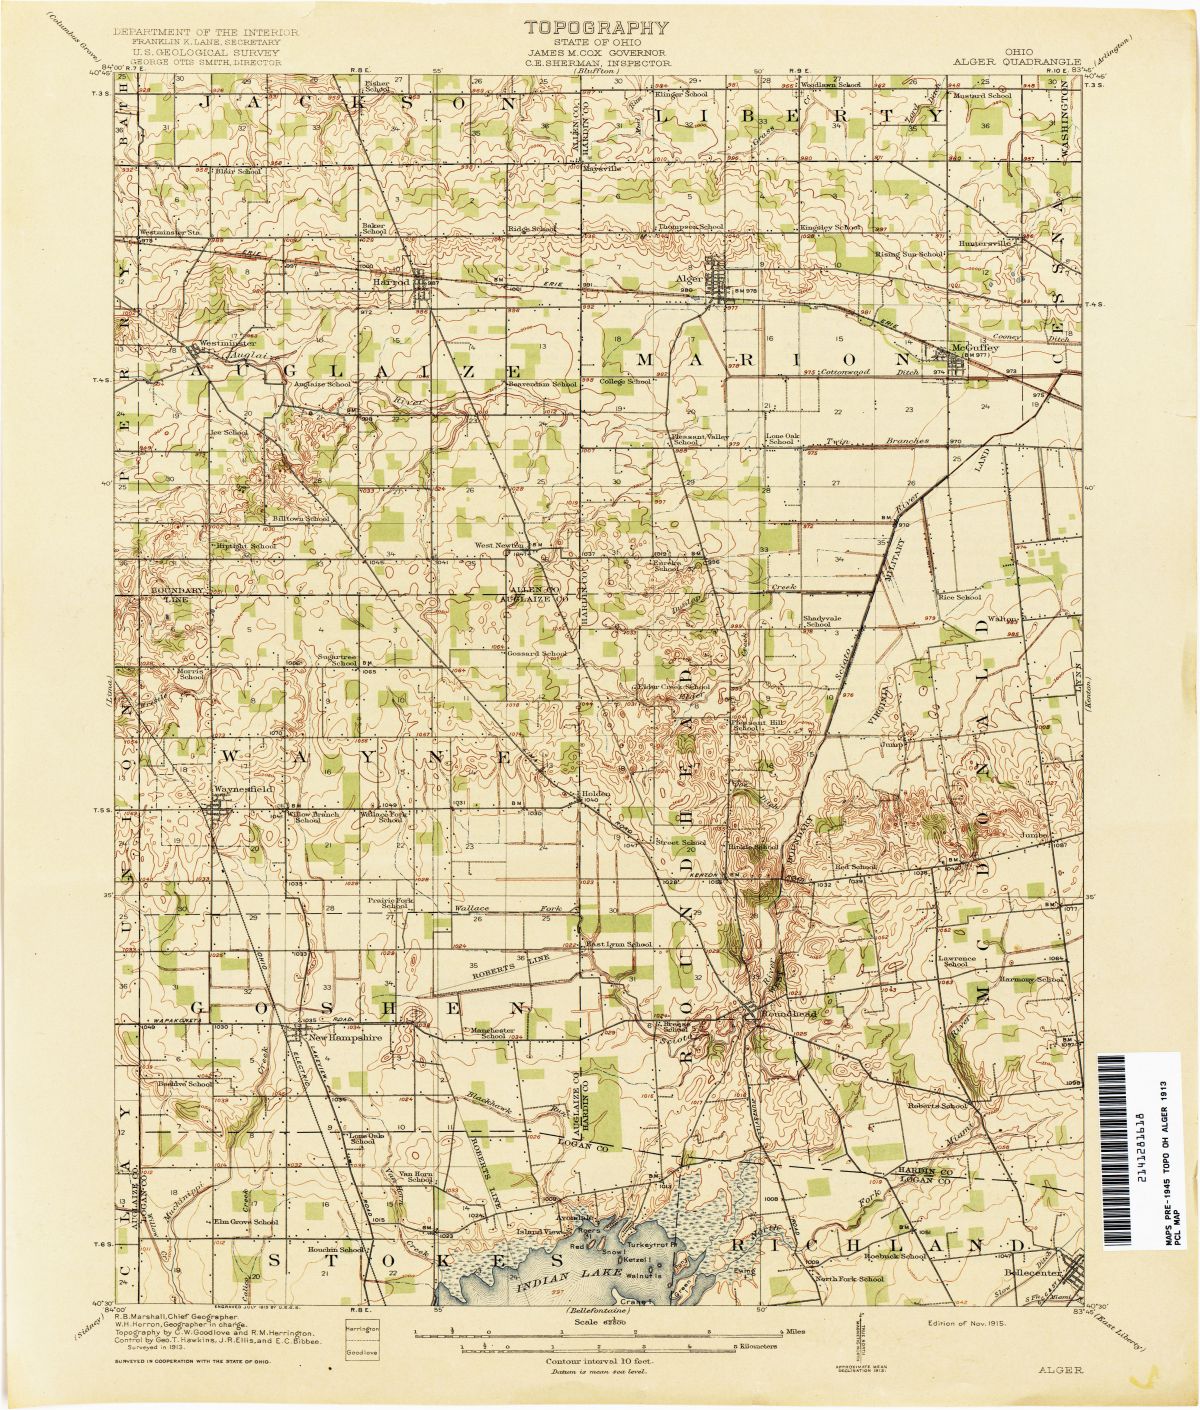 Lima Ohio Zip Code Map Ohio Historical Topographic Maps Perry Castaa Eda Map Collection Of Lima Ohio Zip Code Map 1 1200x1410 